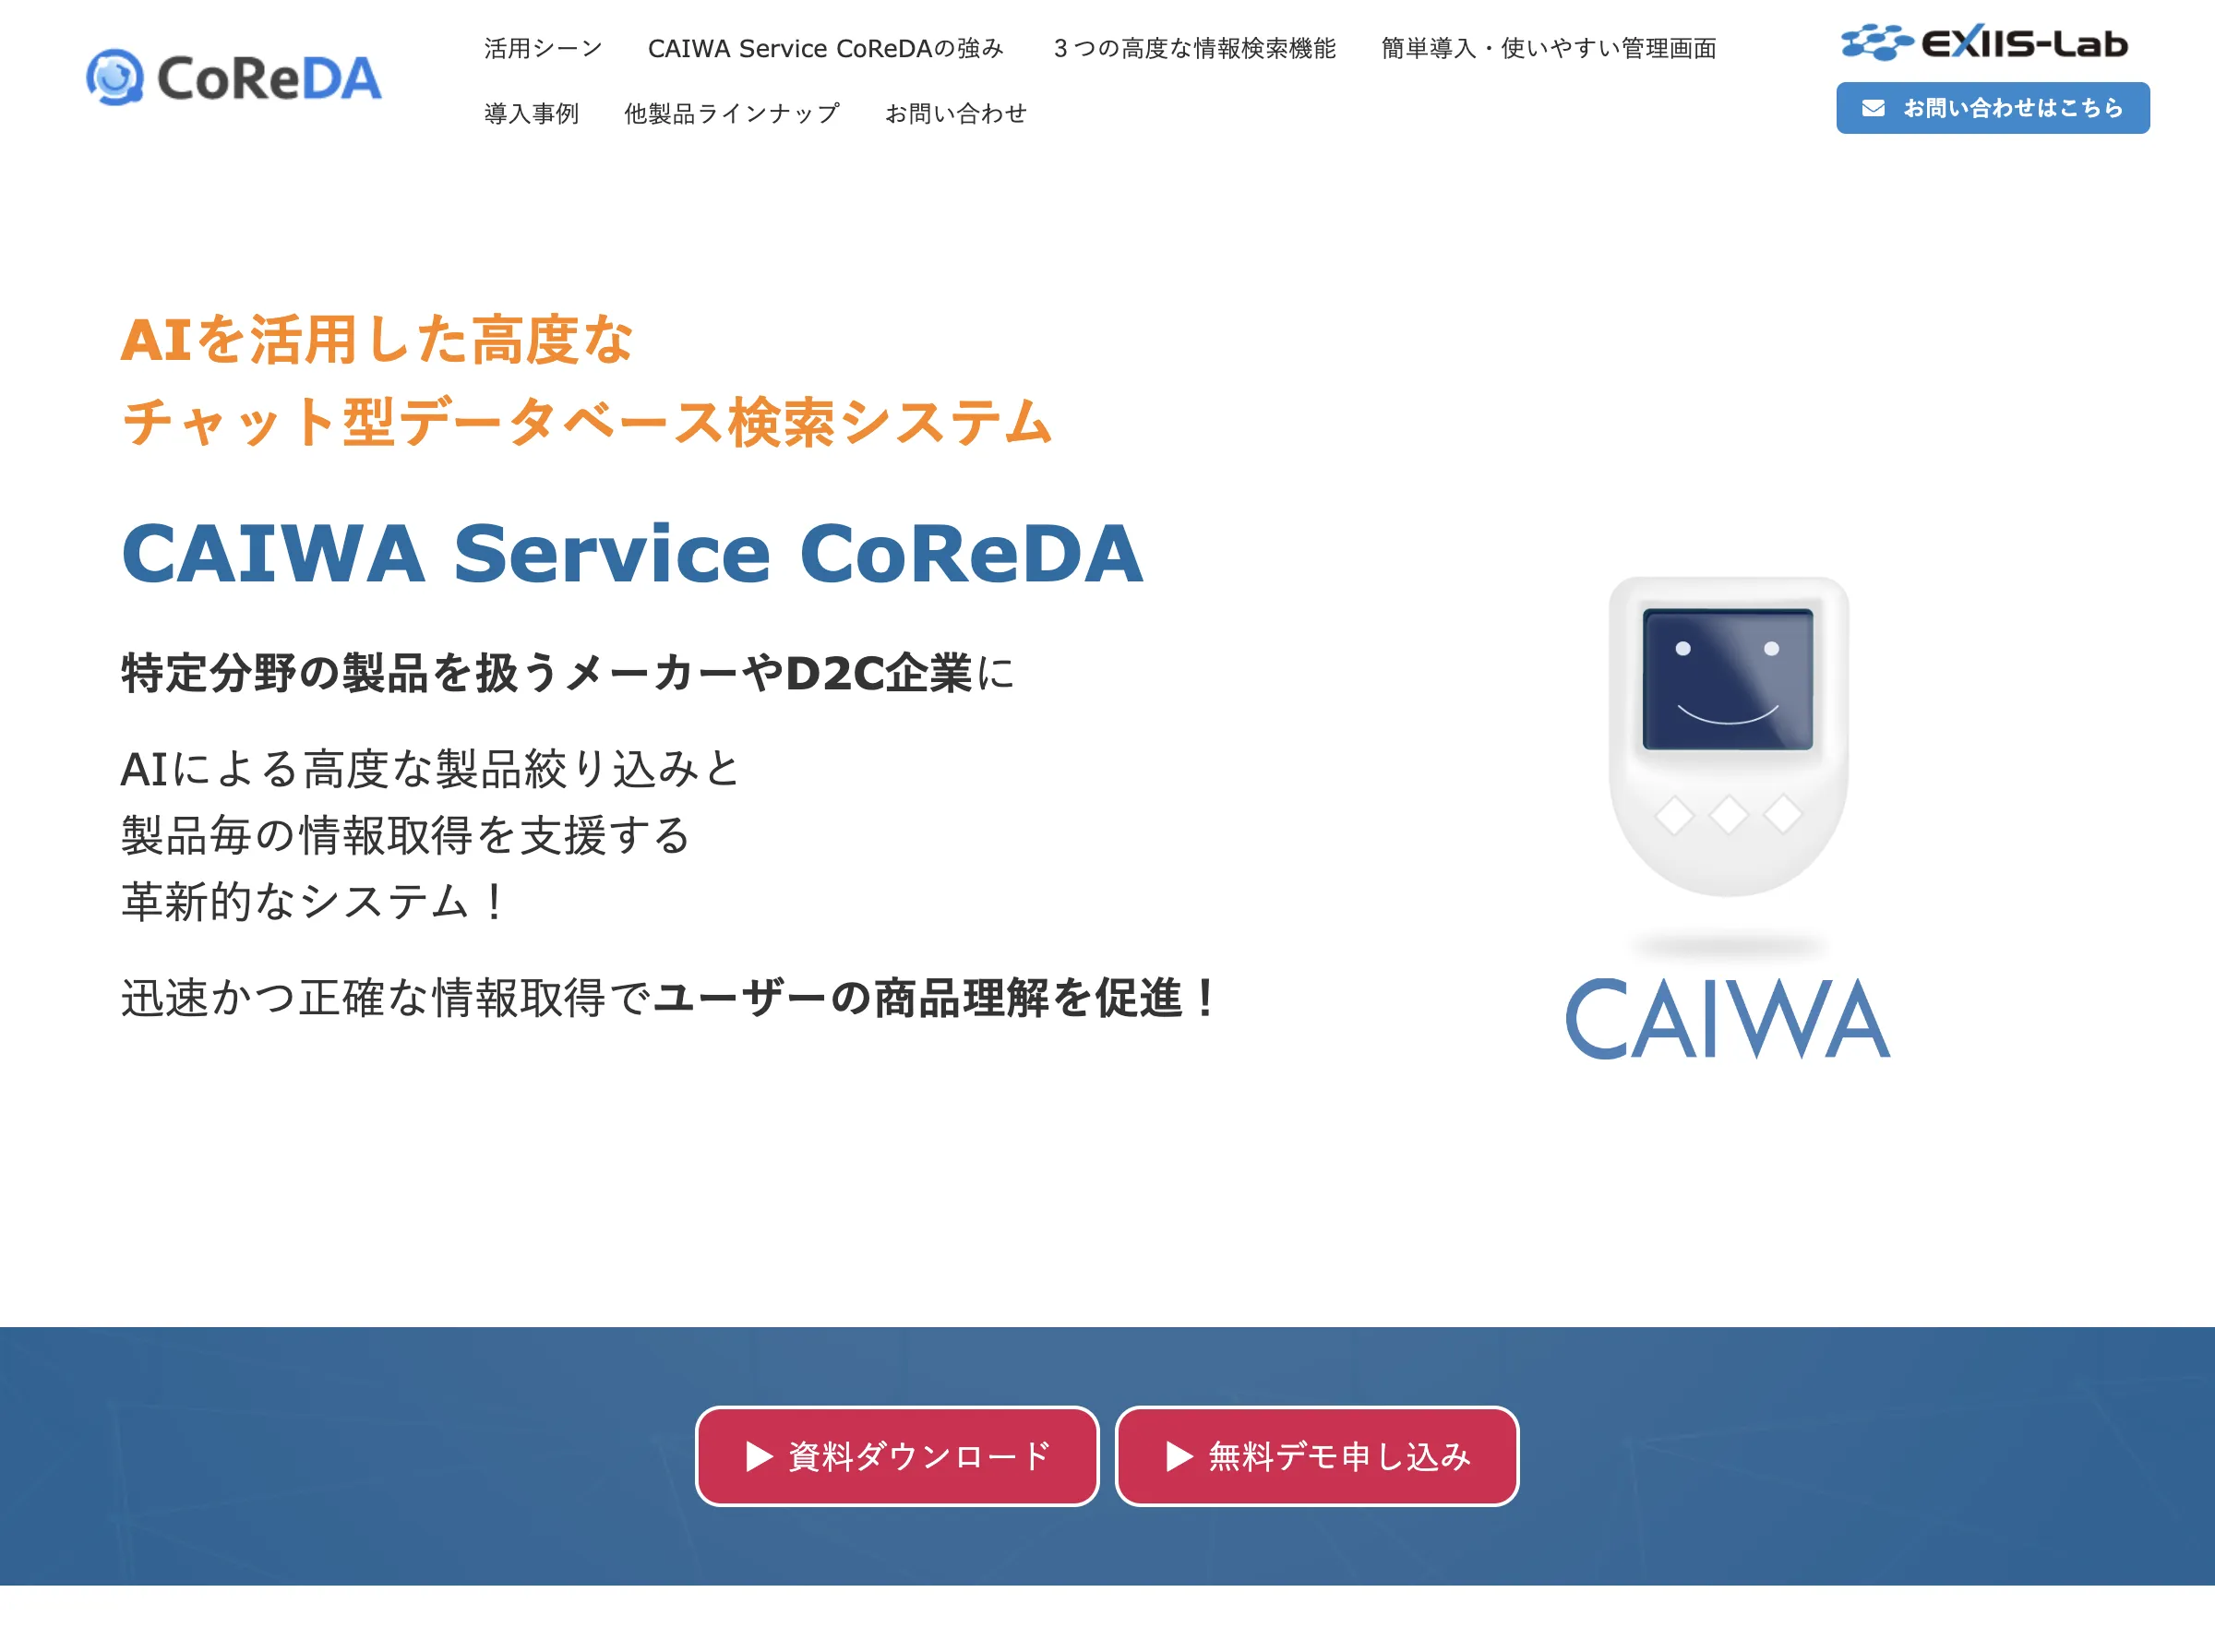 CAIWA Service CoReDA(株式会社イクシーズラボ)